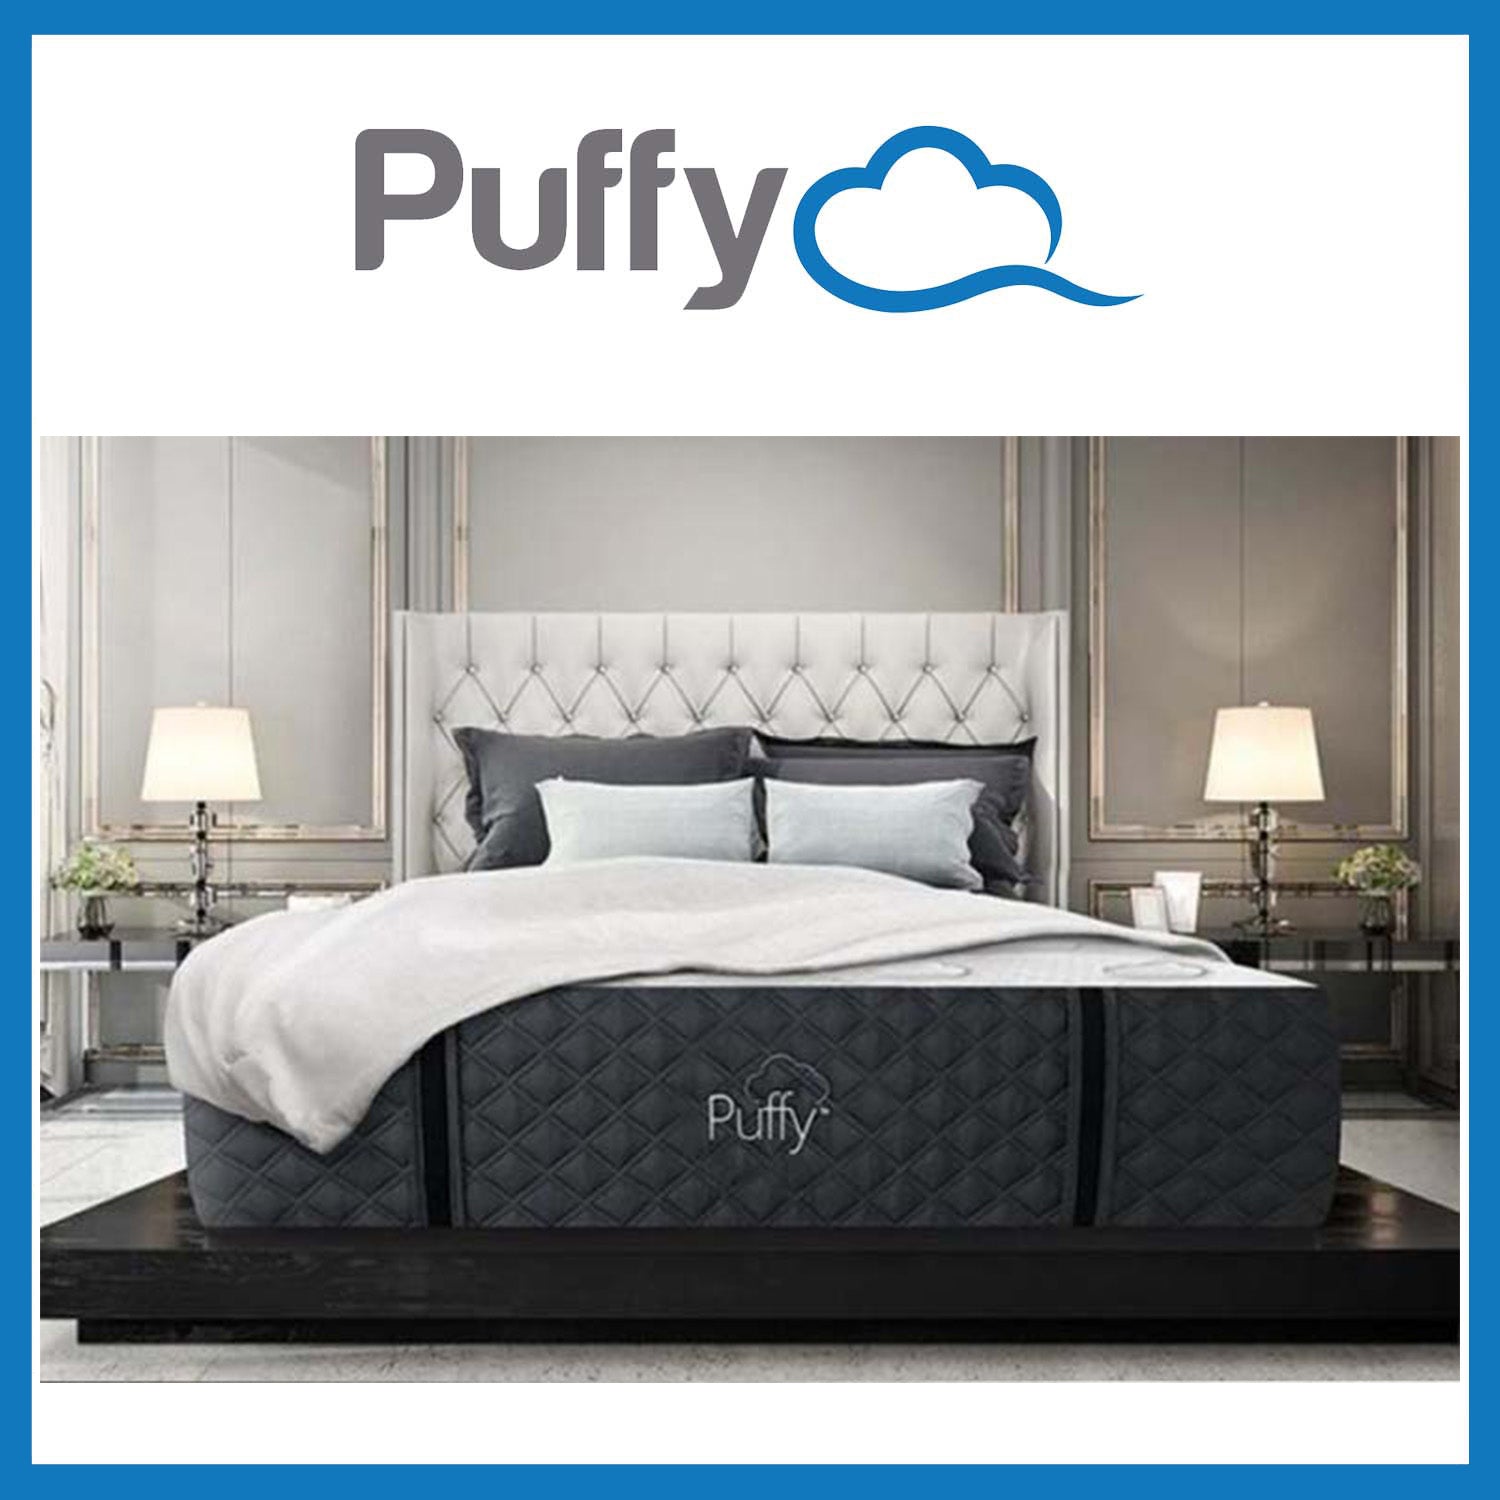 Official Puffy® Mattress  Shop Our #1 Luxury Mattresses